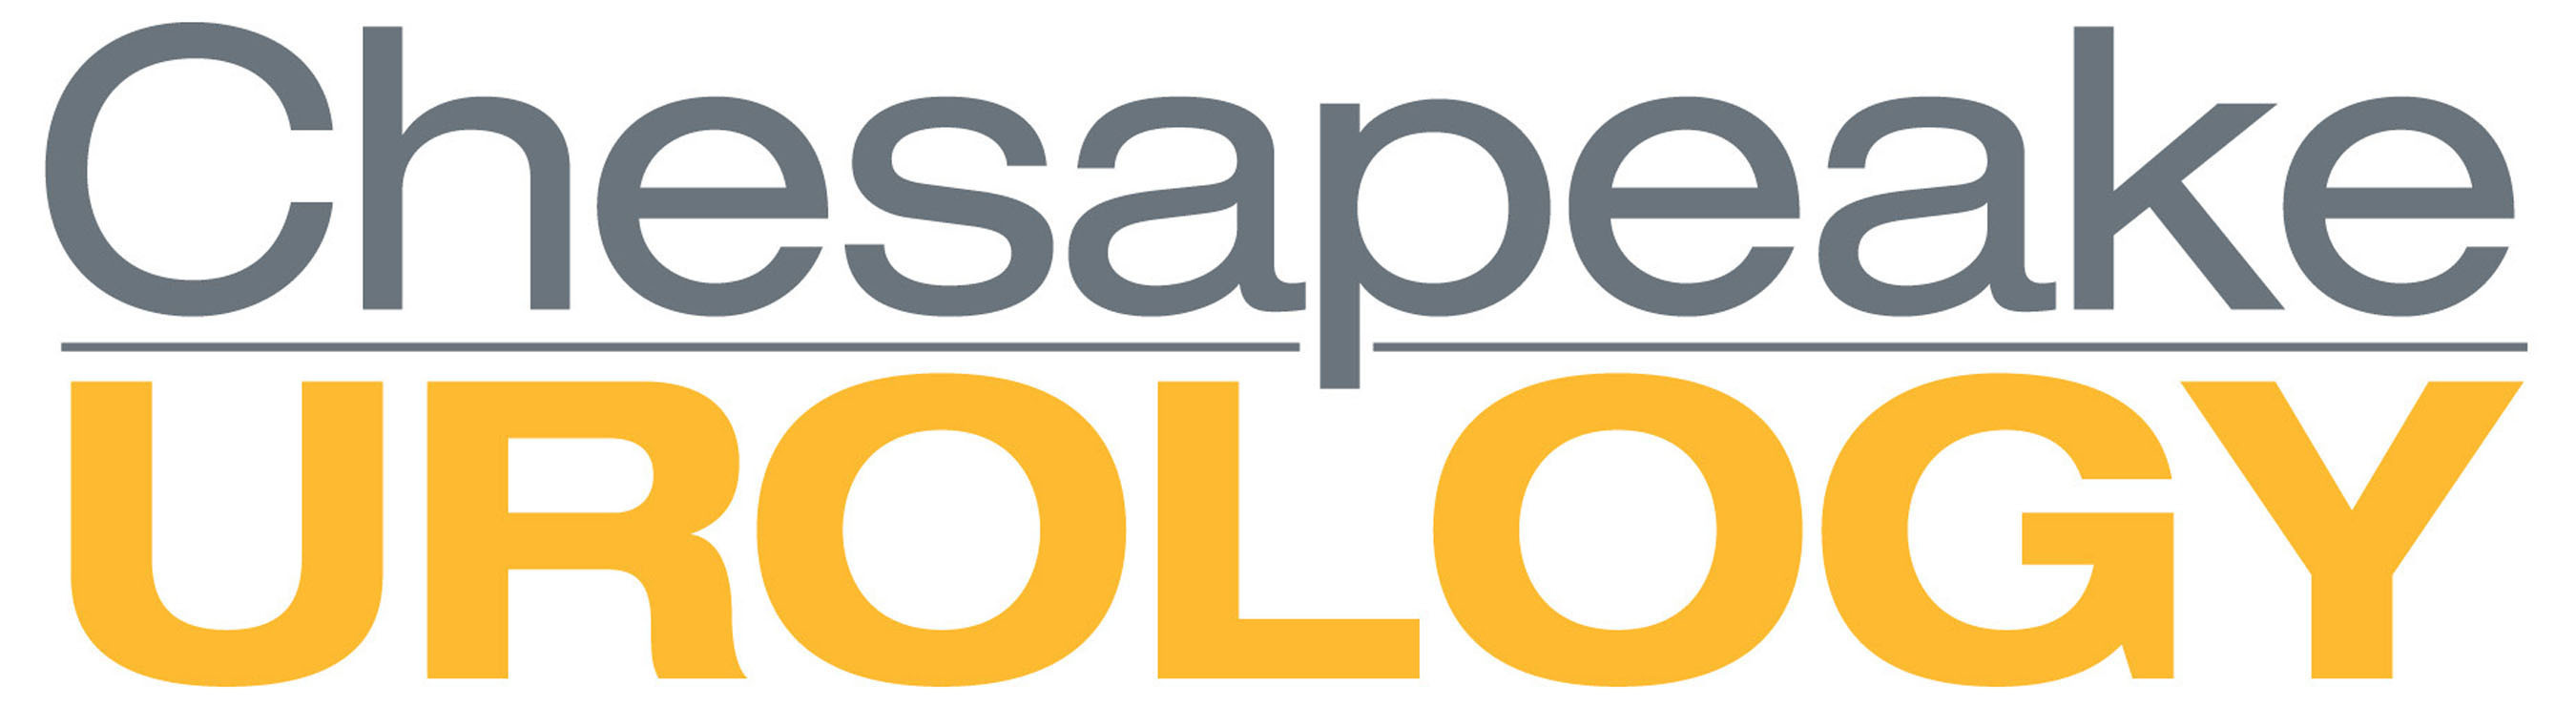 Chesapeake Urology Associates logo.